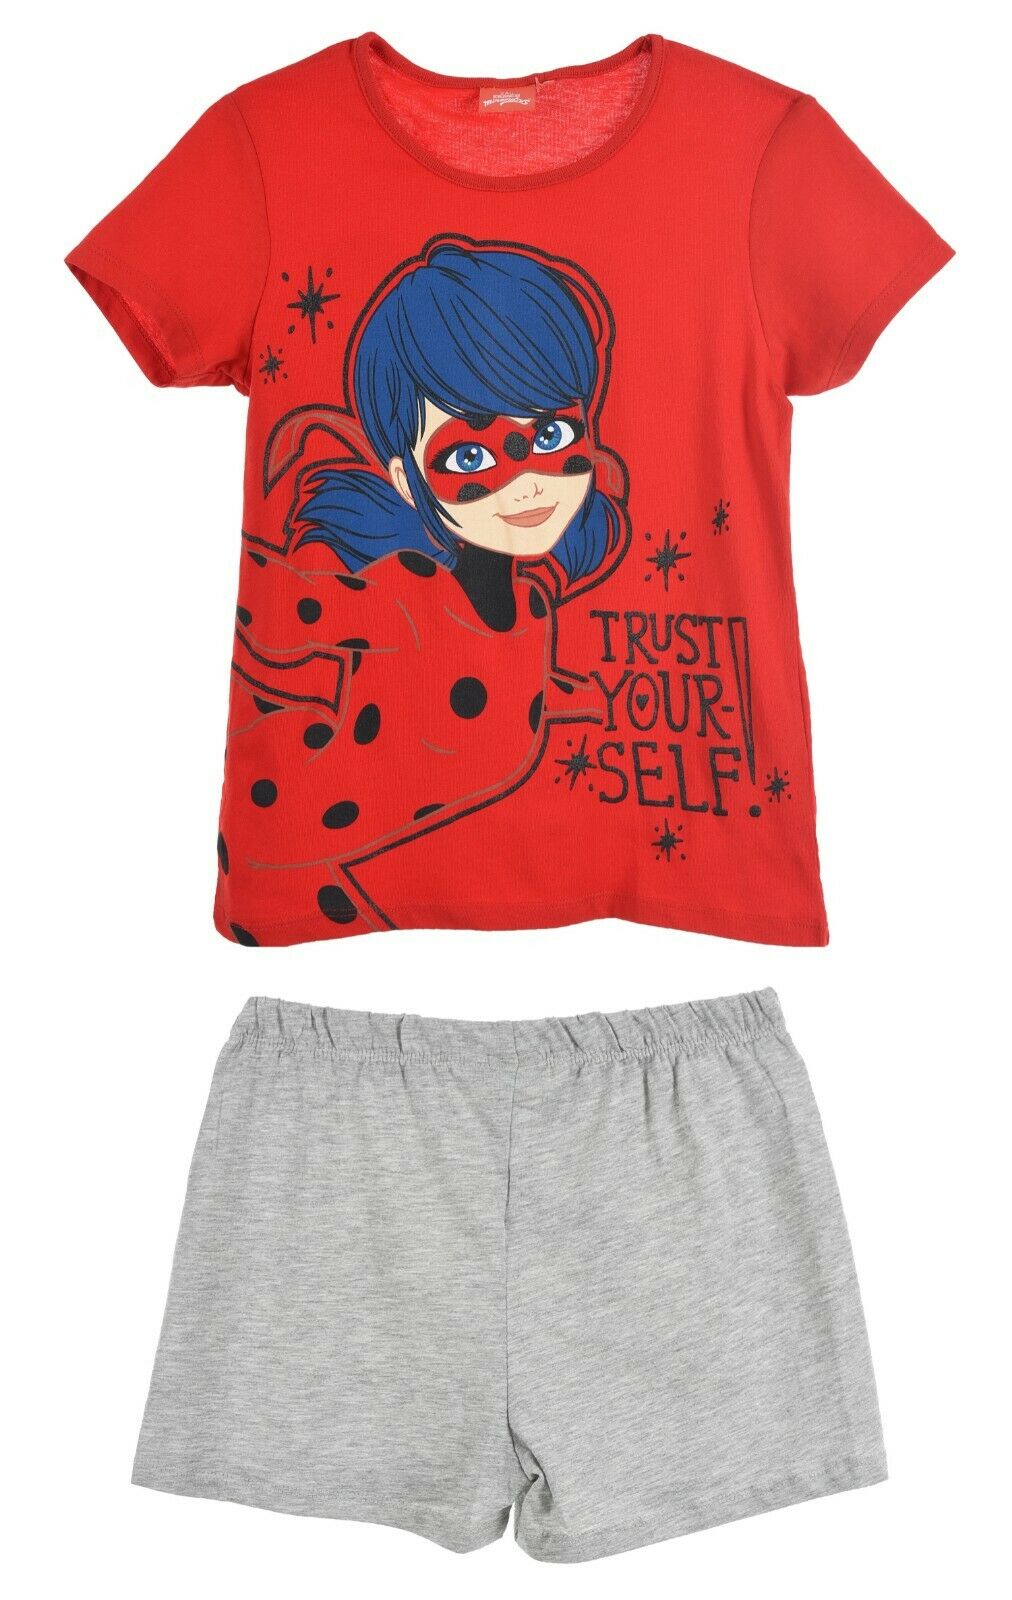 Miraculous Ladybug & Cat Noir Red & Grey Pyjama Short Set. Ages 4, 5, 6, 8, 95% Cotton & 5% Viscose